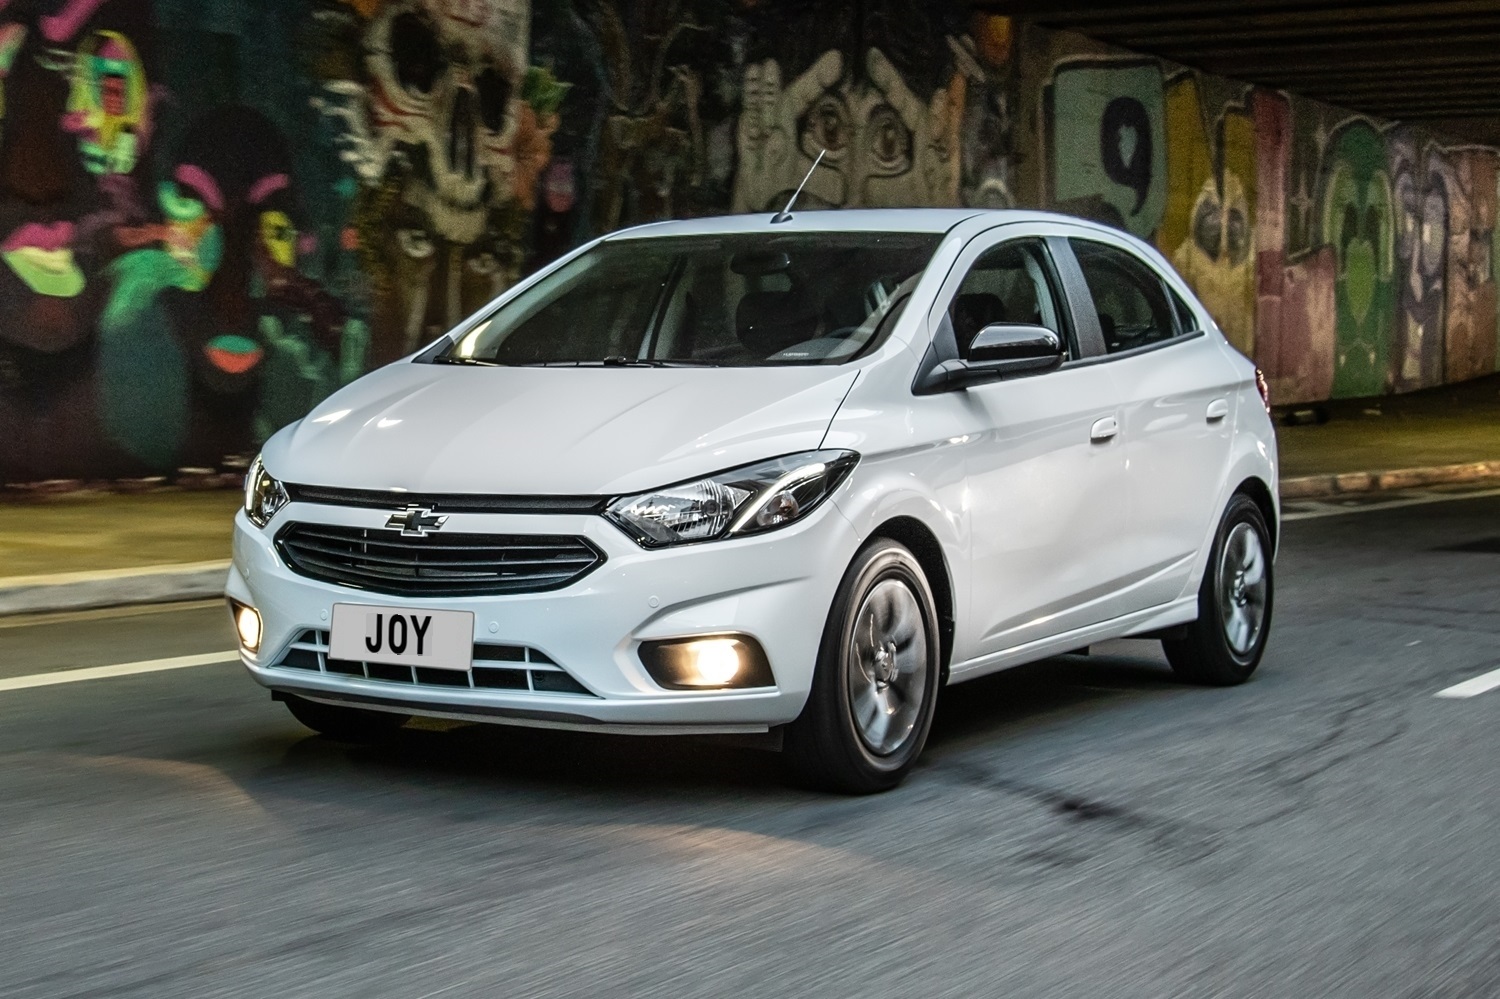 GM Relaunches First-Gen Onix As Chevrolet Joy In Brazil